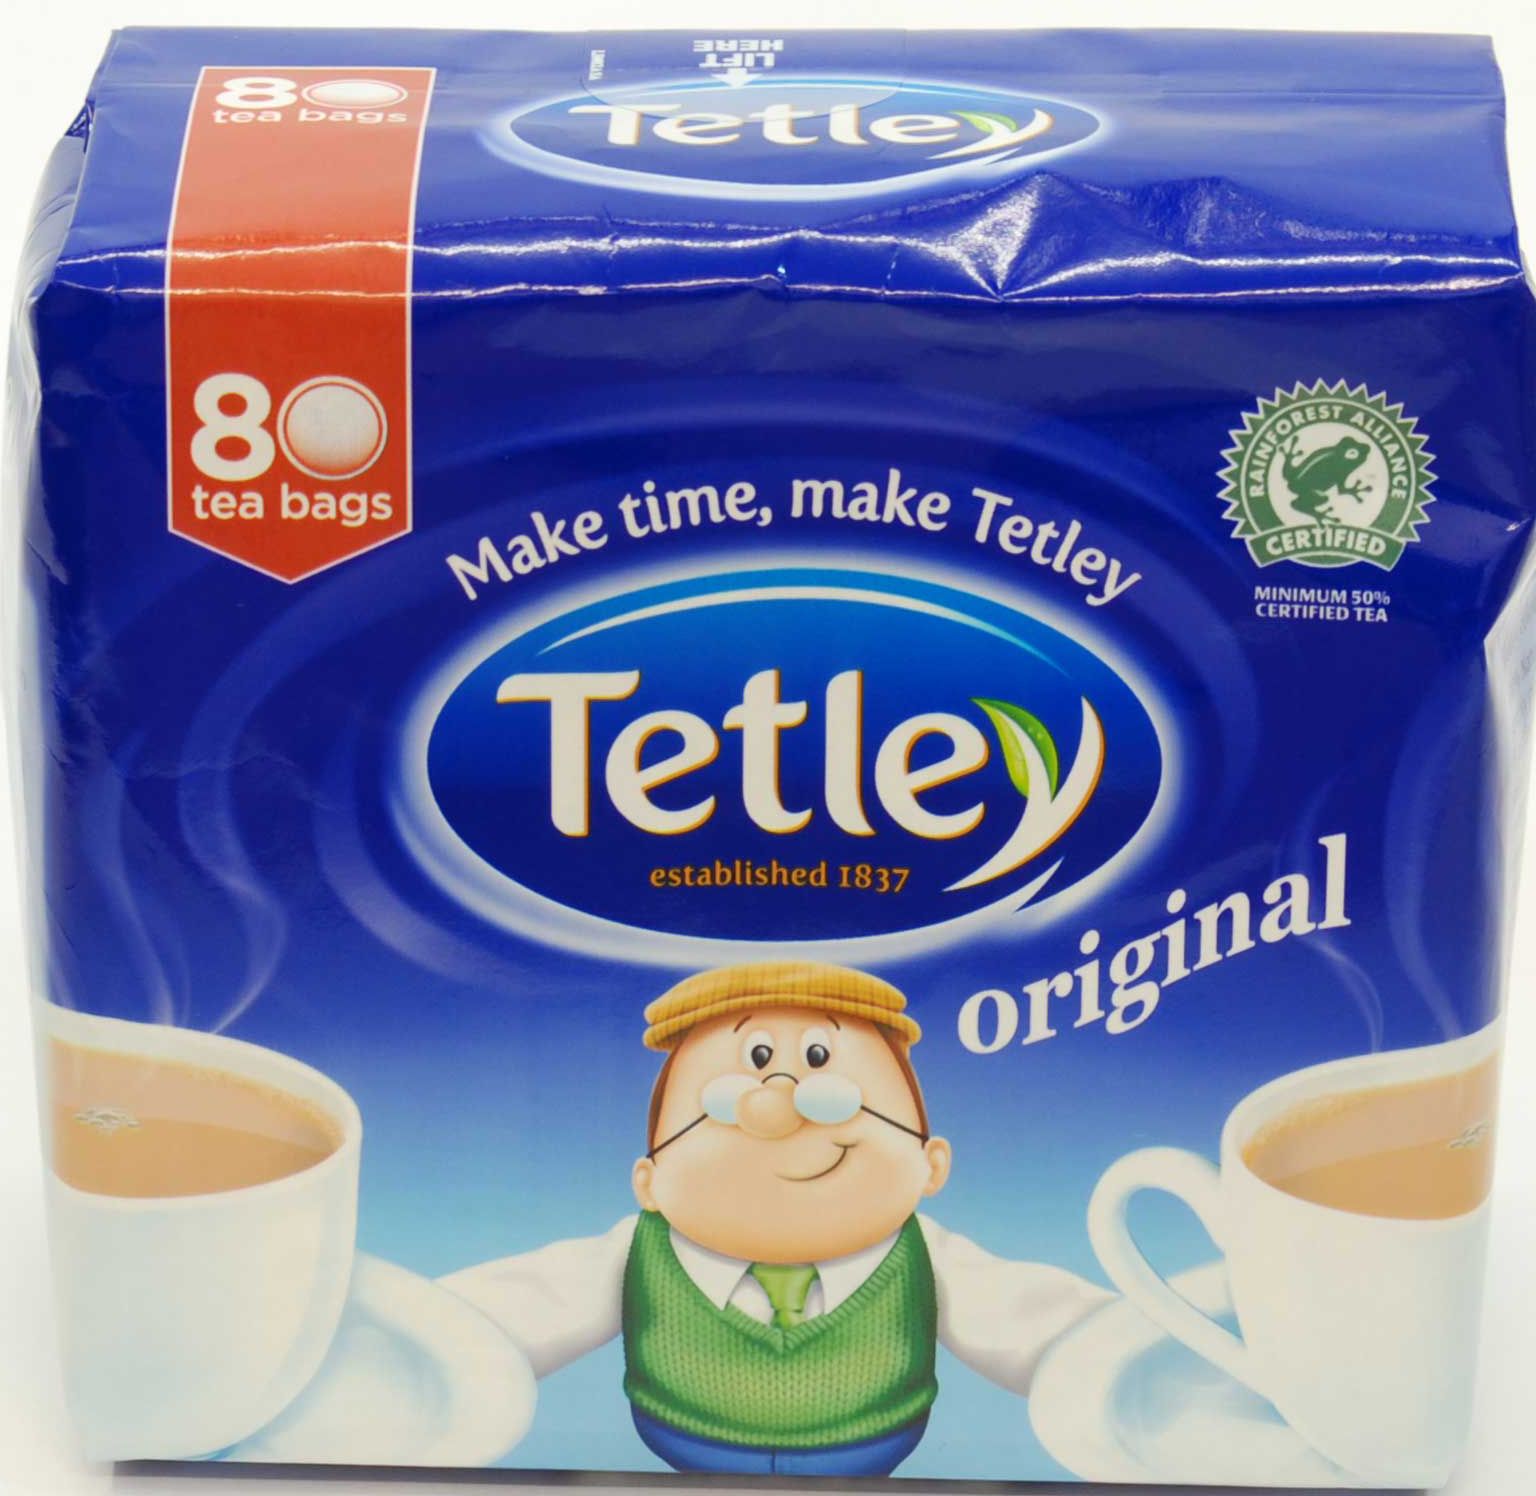 80 Tetley Tea Bags